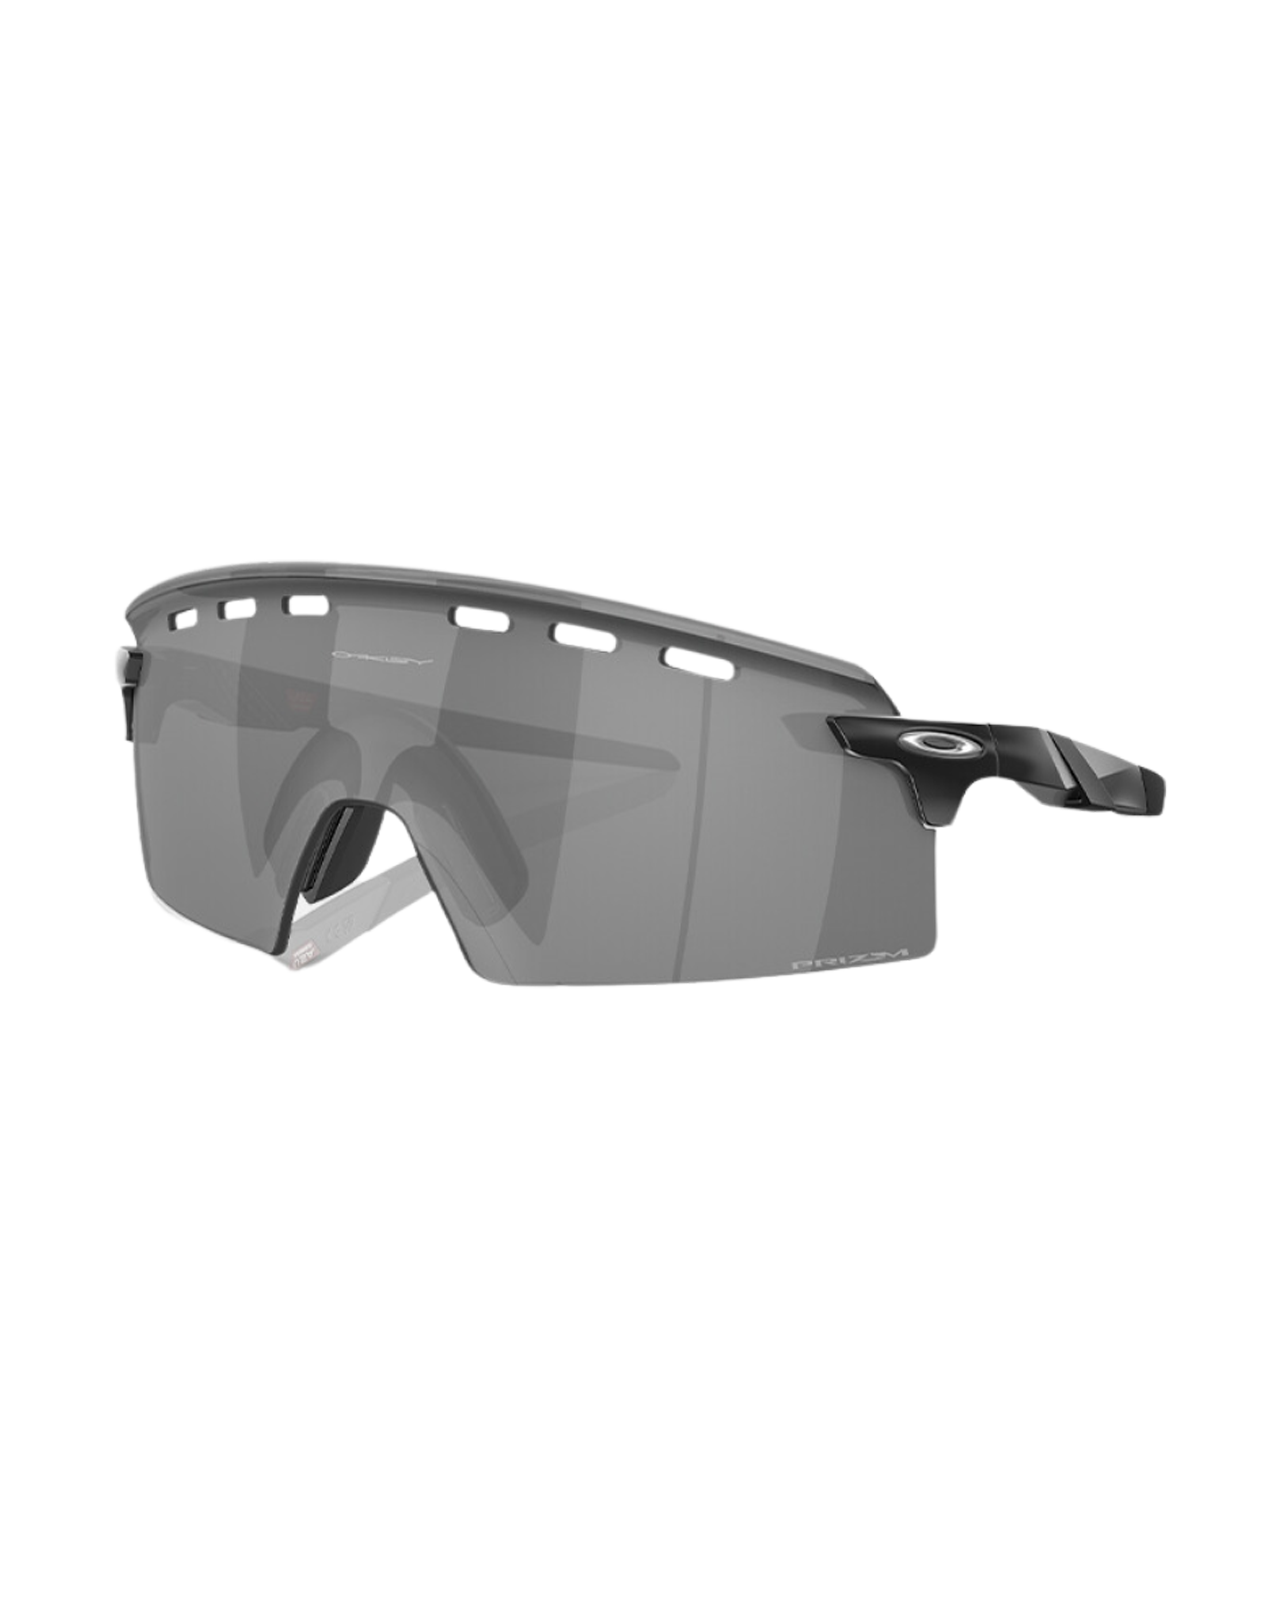 Oakley Encoder Strike Vented Sunglasses - Matte Black / Prizm Black - Oakley